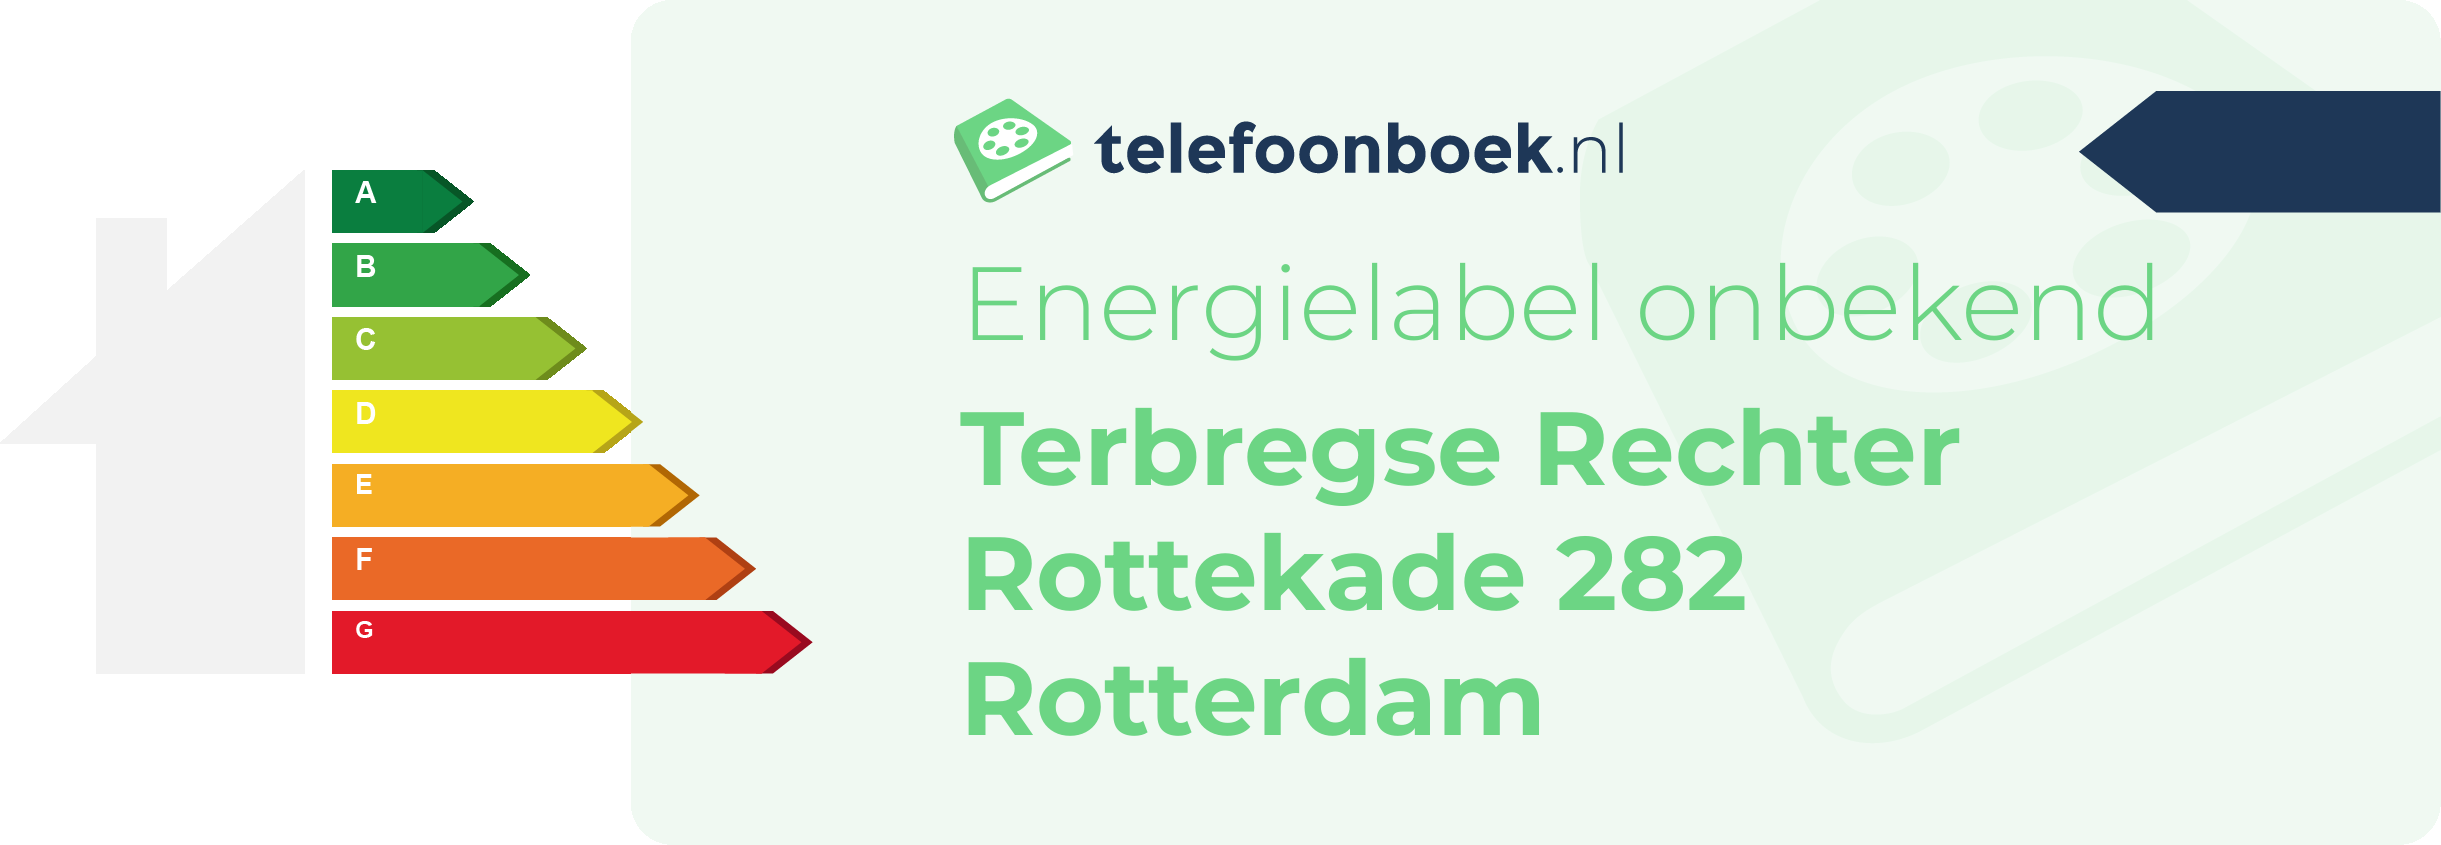 Energielabel Terbregse Rechter Rottekade 282 Rotterdam